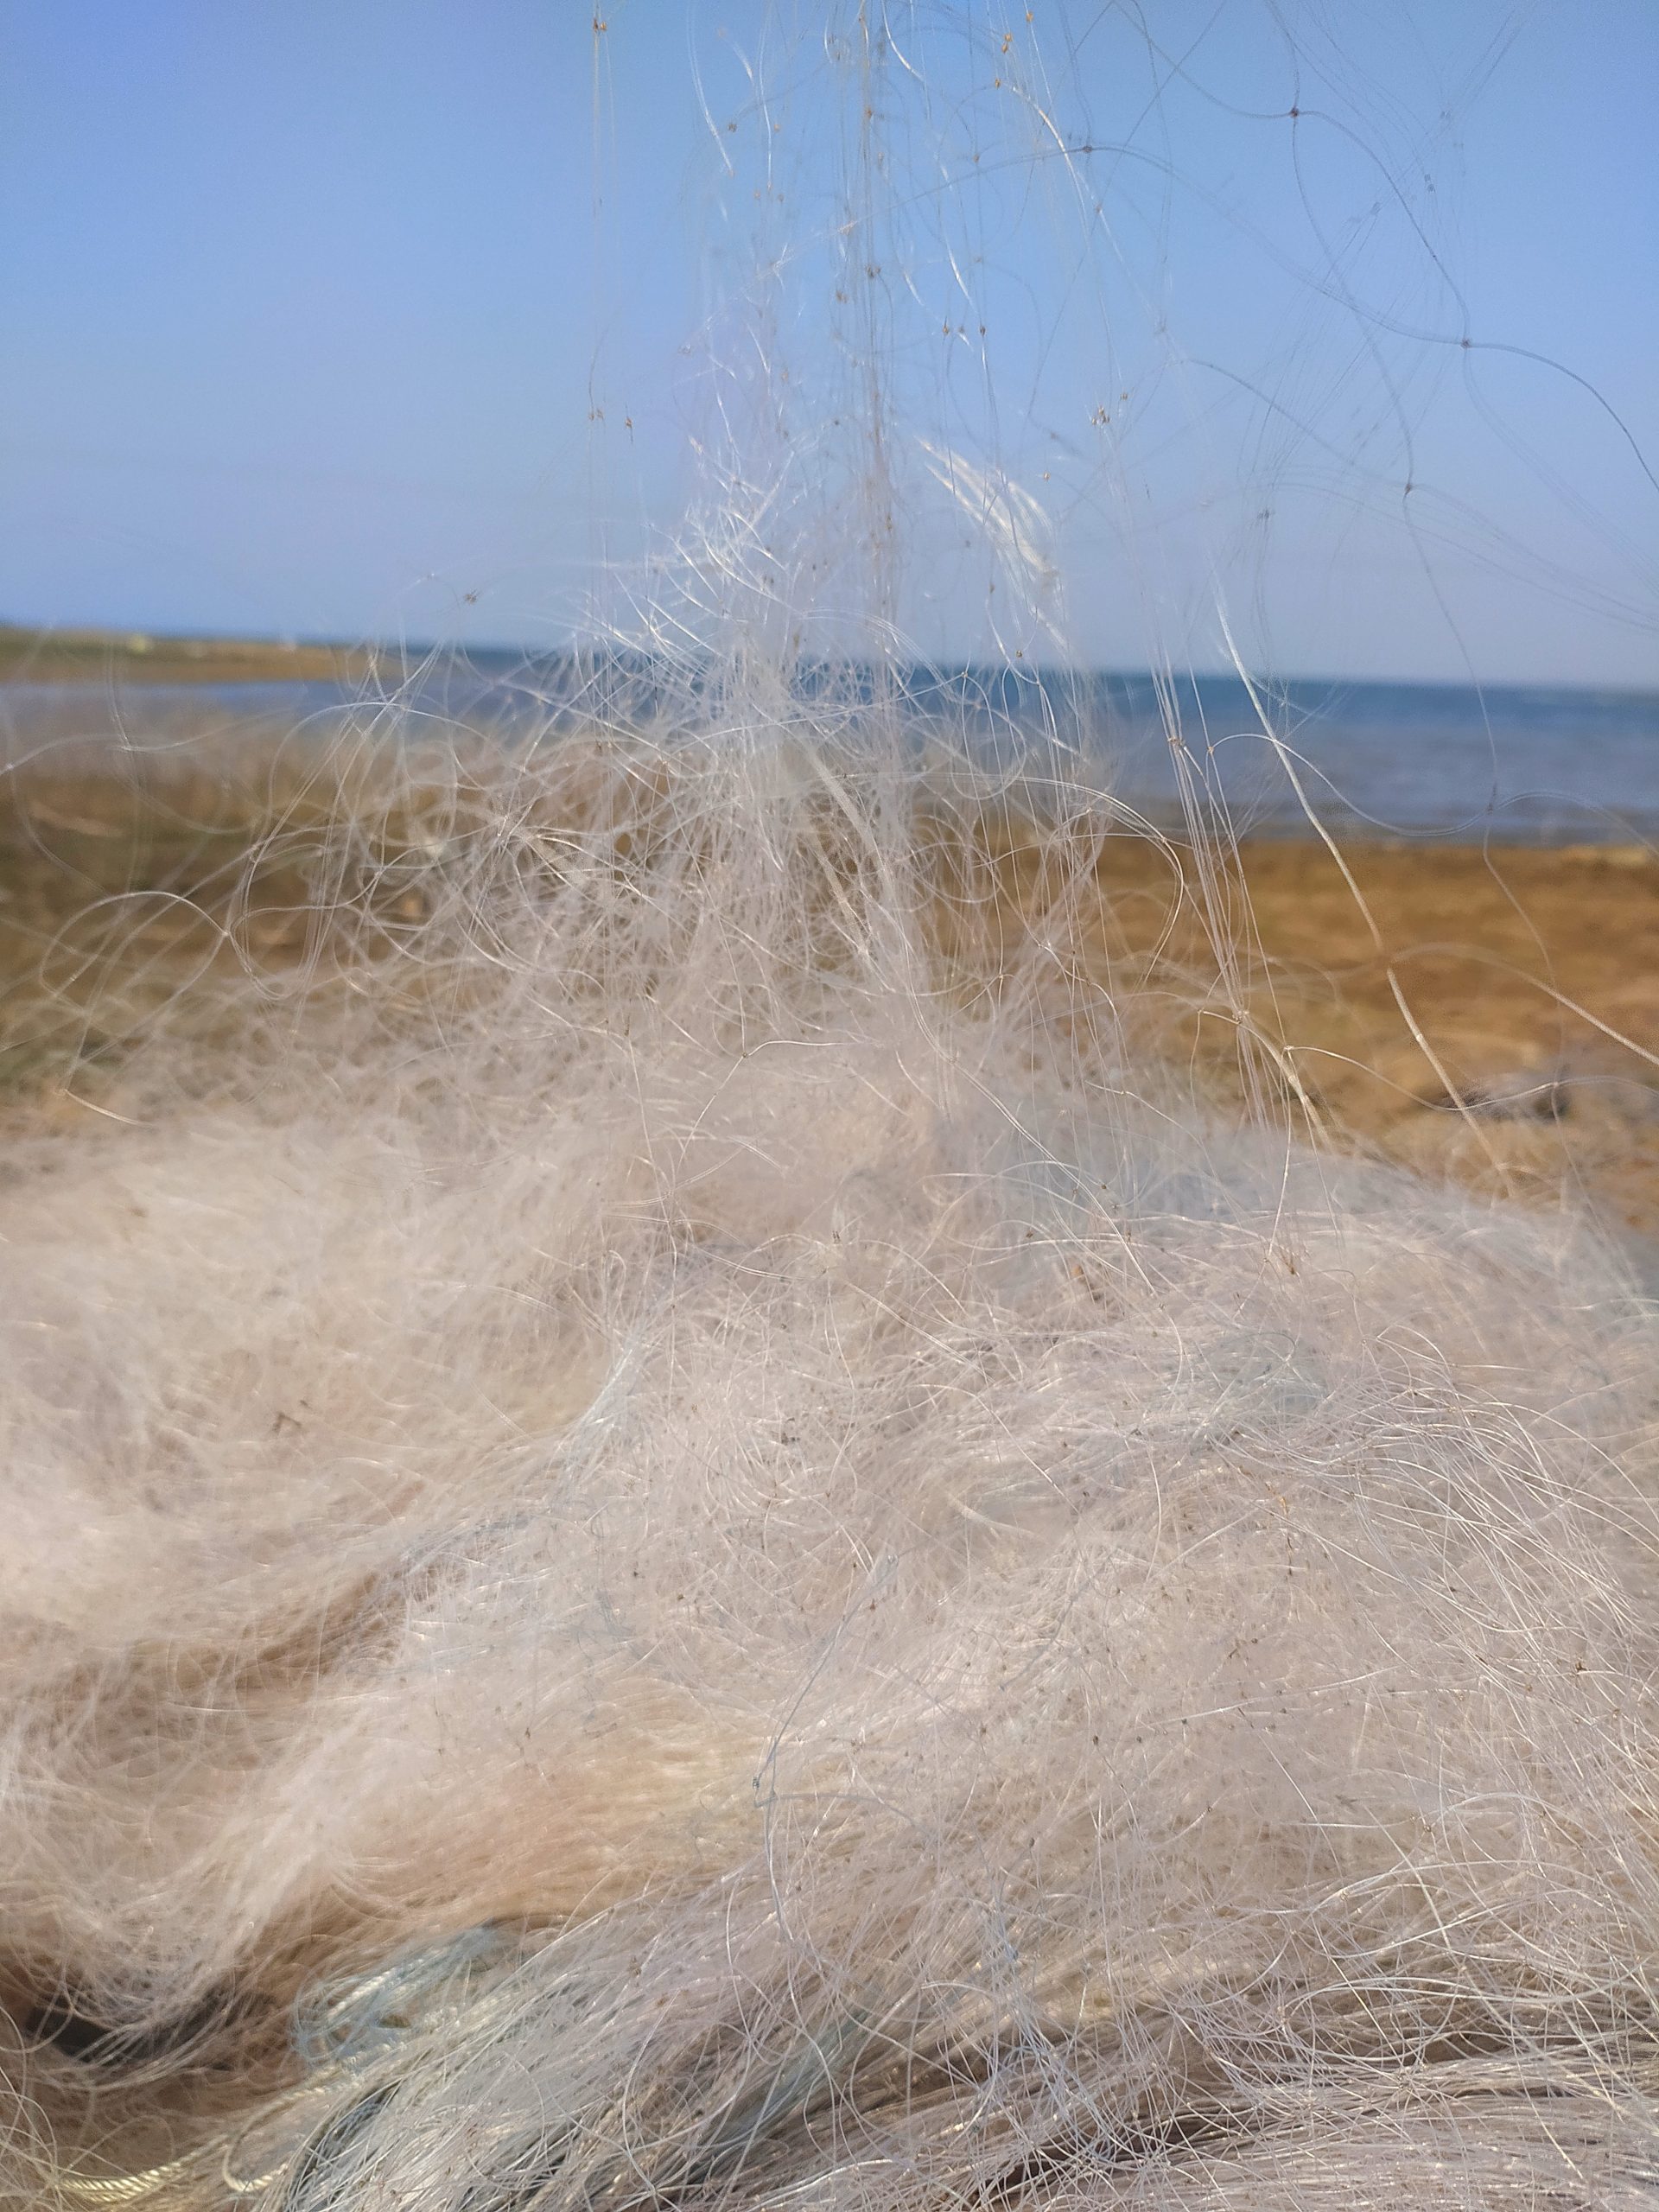 Fishing net on a beach